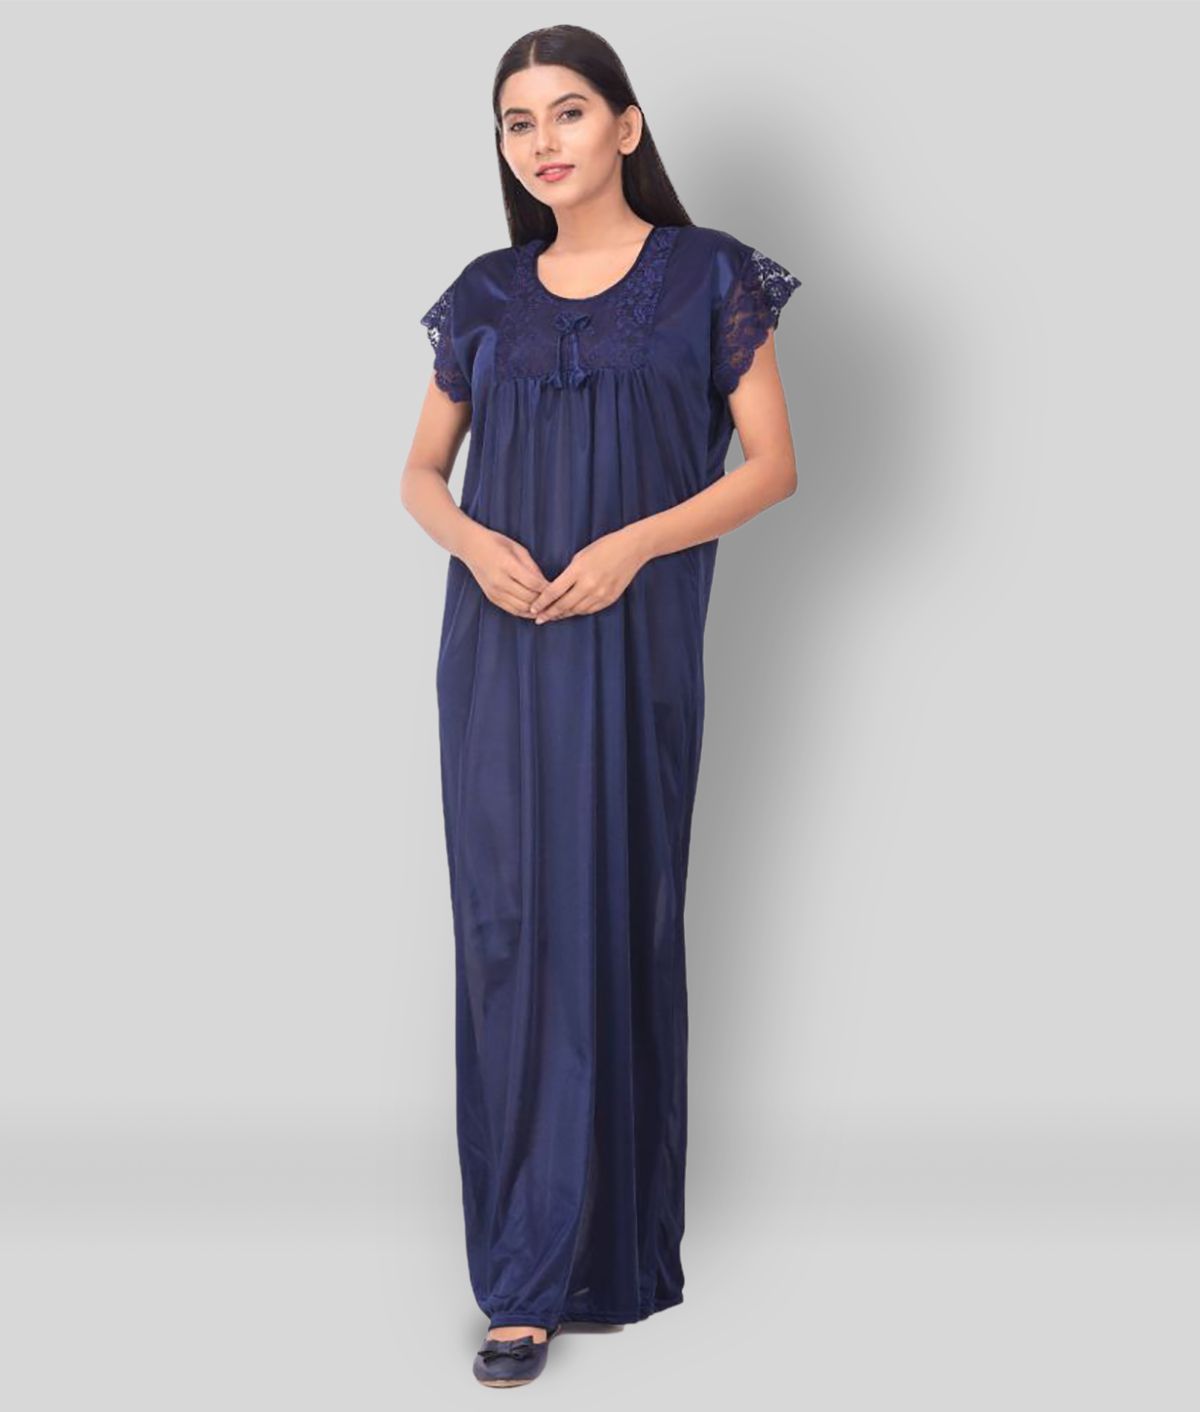     			Apratim - Navy Blue Satin Women's Nightwear Nighty & Night Gowns ( Pack of 1 )